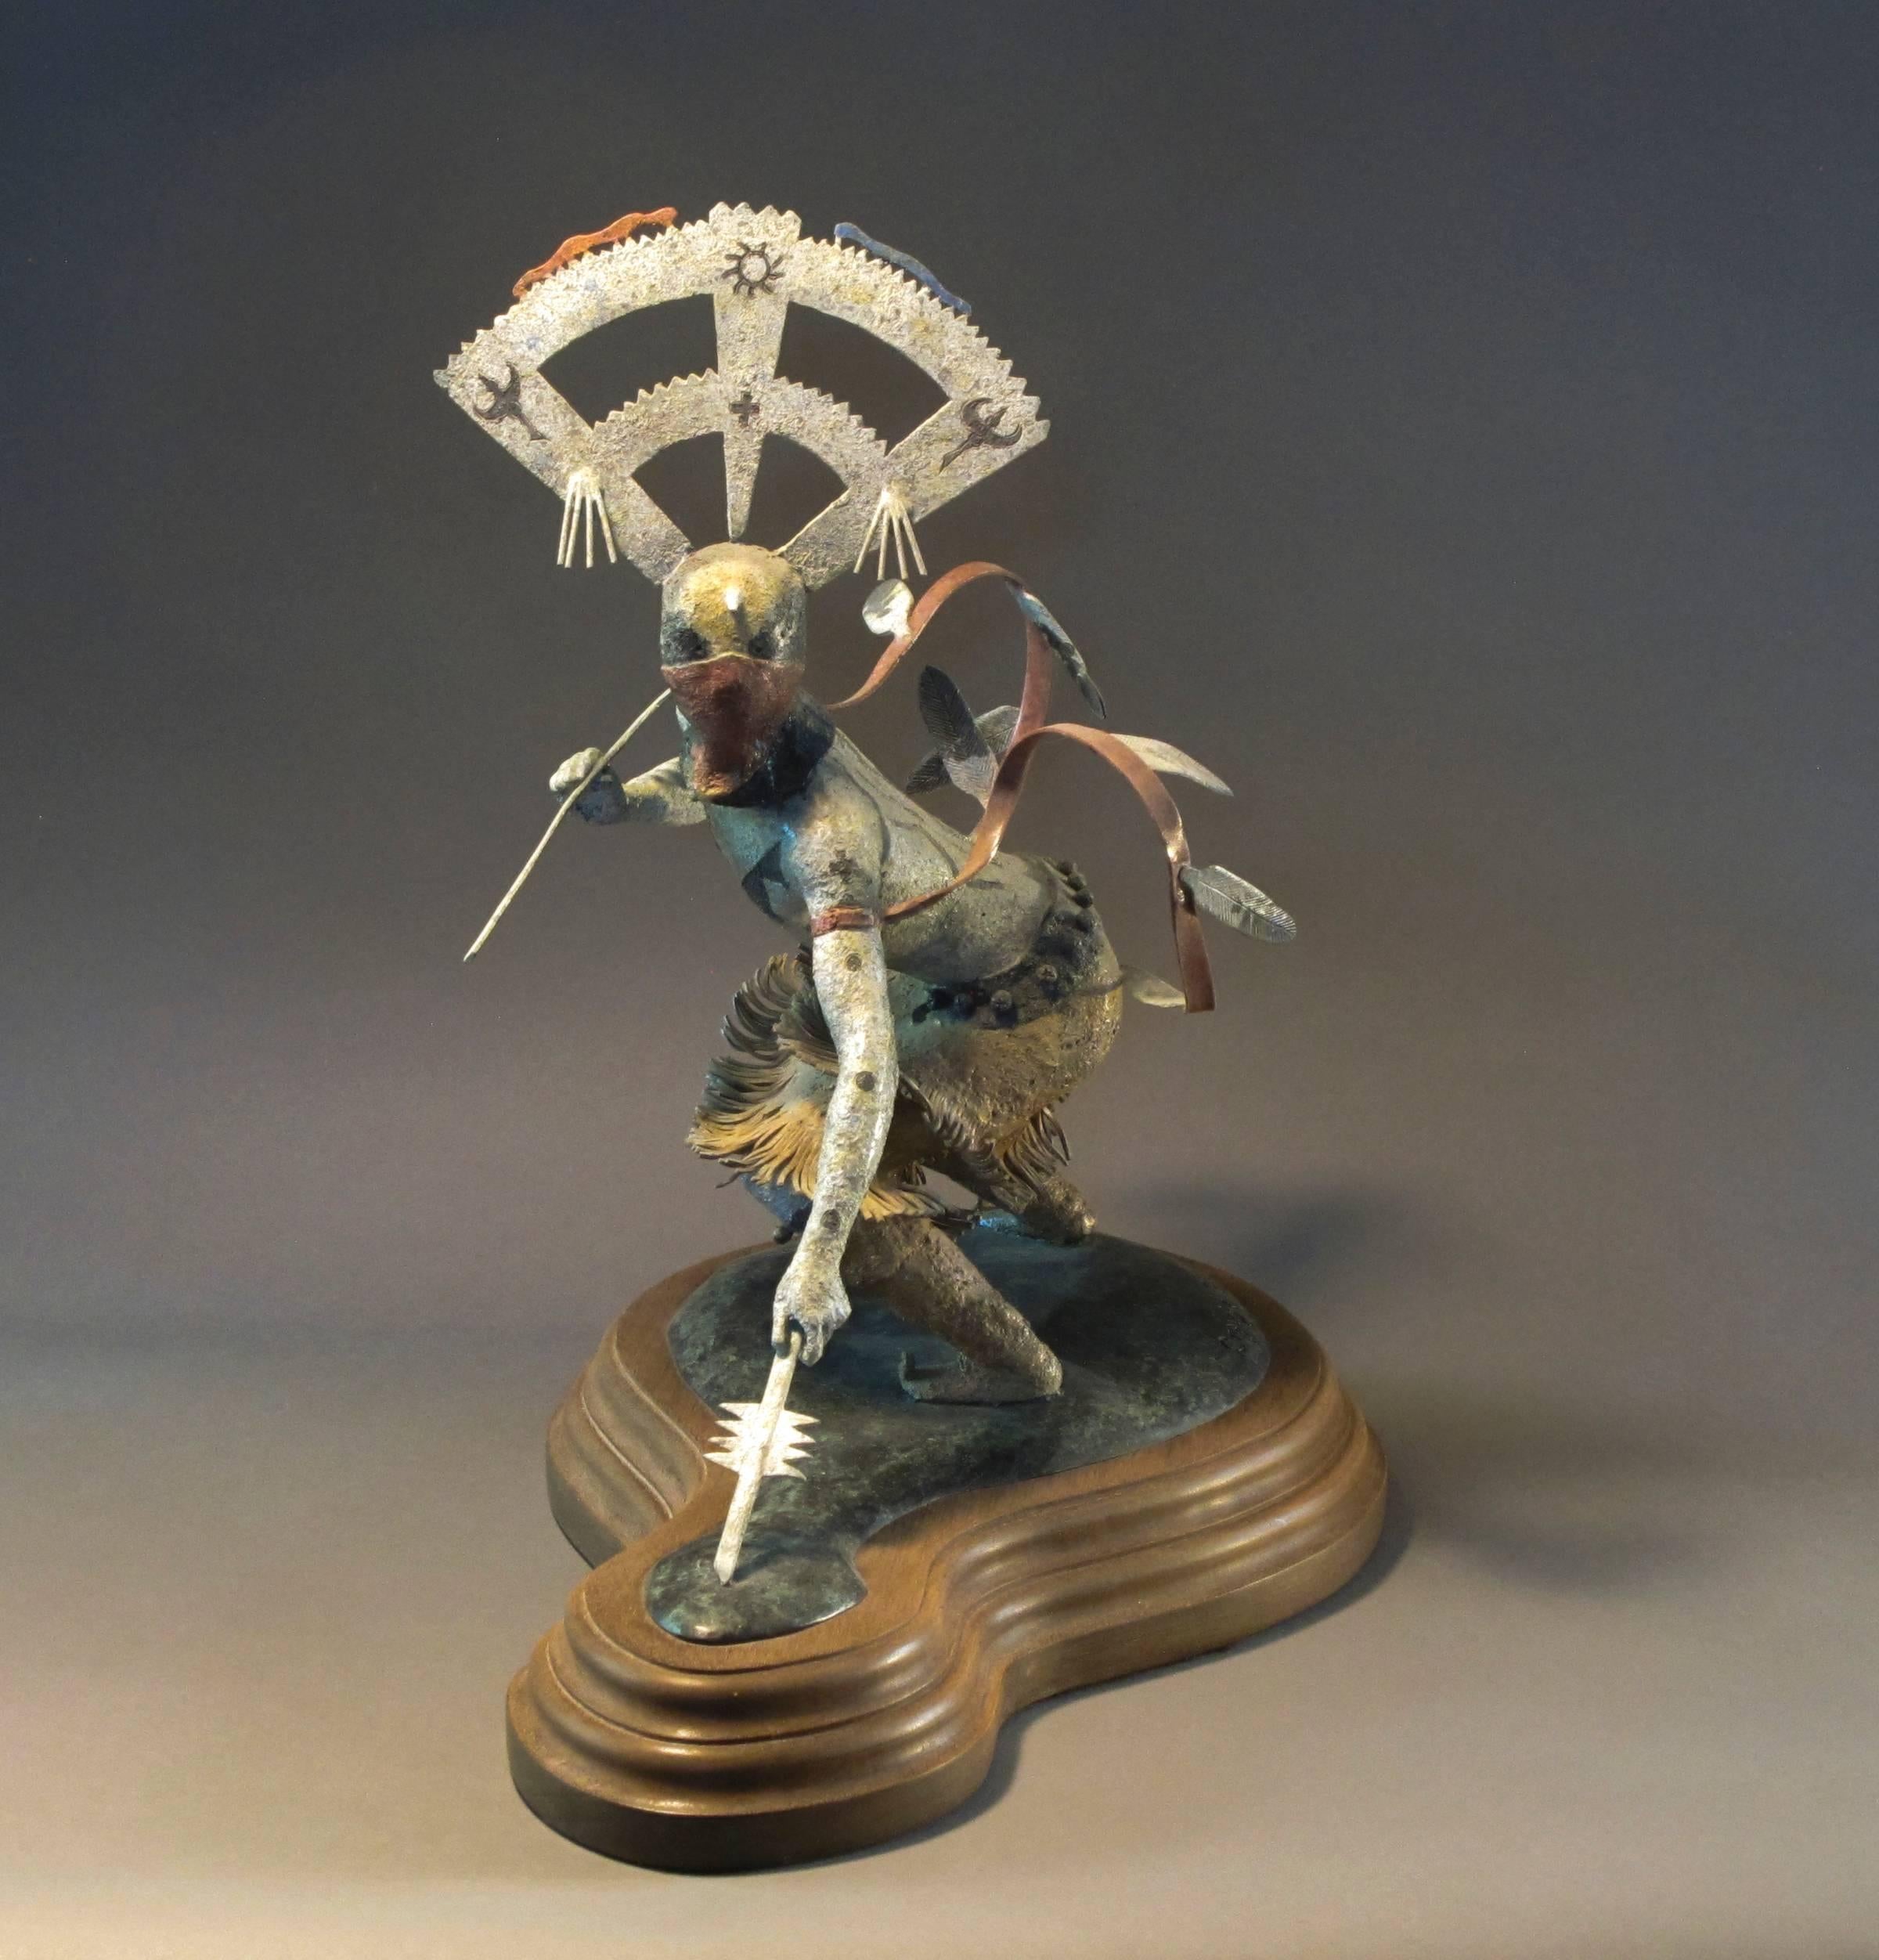 Craig Dan Goseyun Figurative Sculpture - Gahn Dancer, Apache Mountain Spirit Dancer, bronze sculpture colored patina